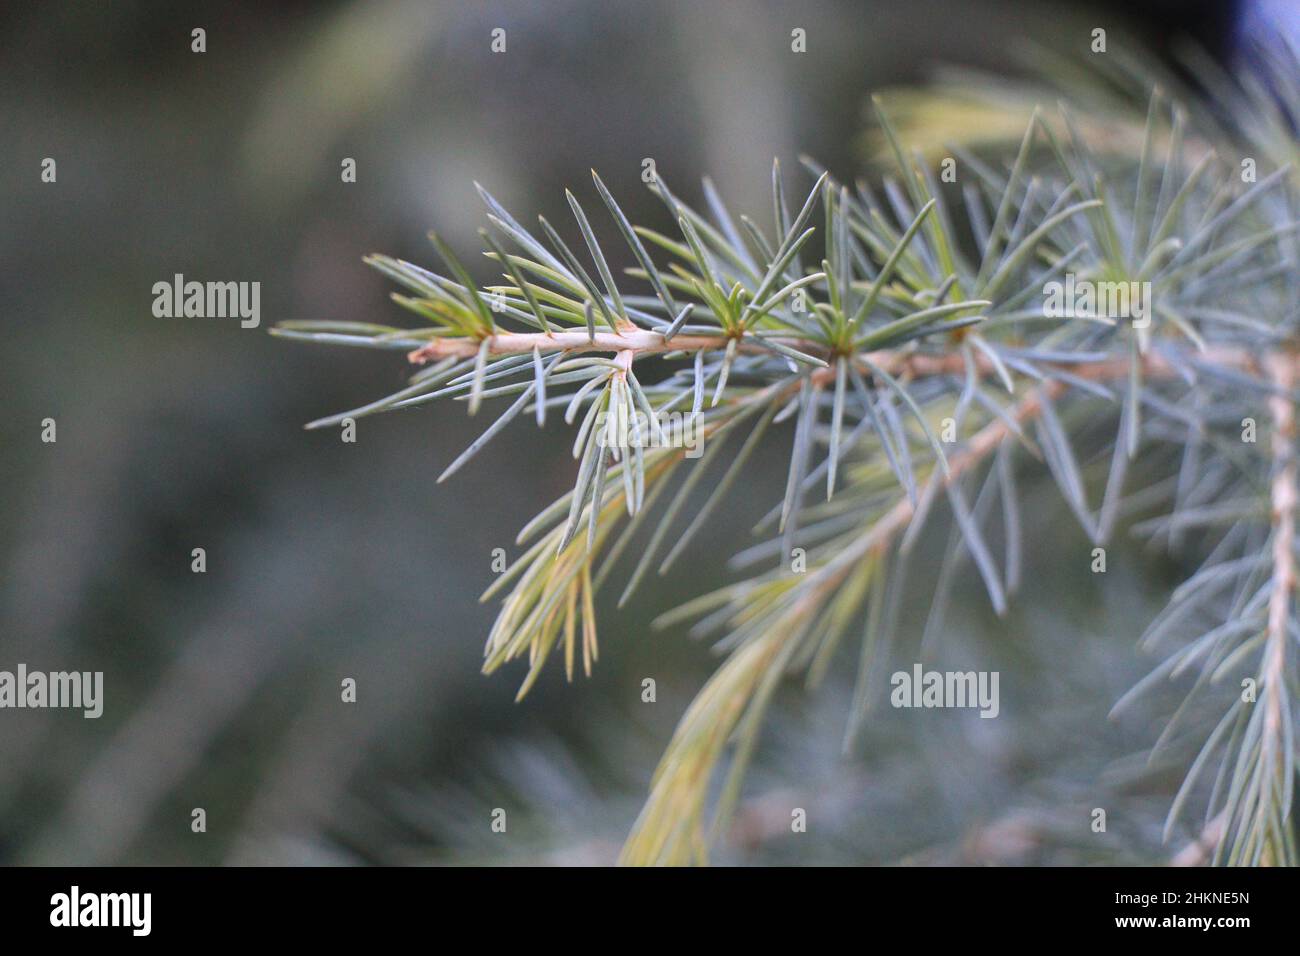 Branches of Cedrus deodara. Deodar cedar or Himalayan cedar Stock Photo